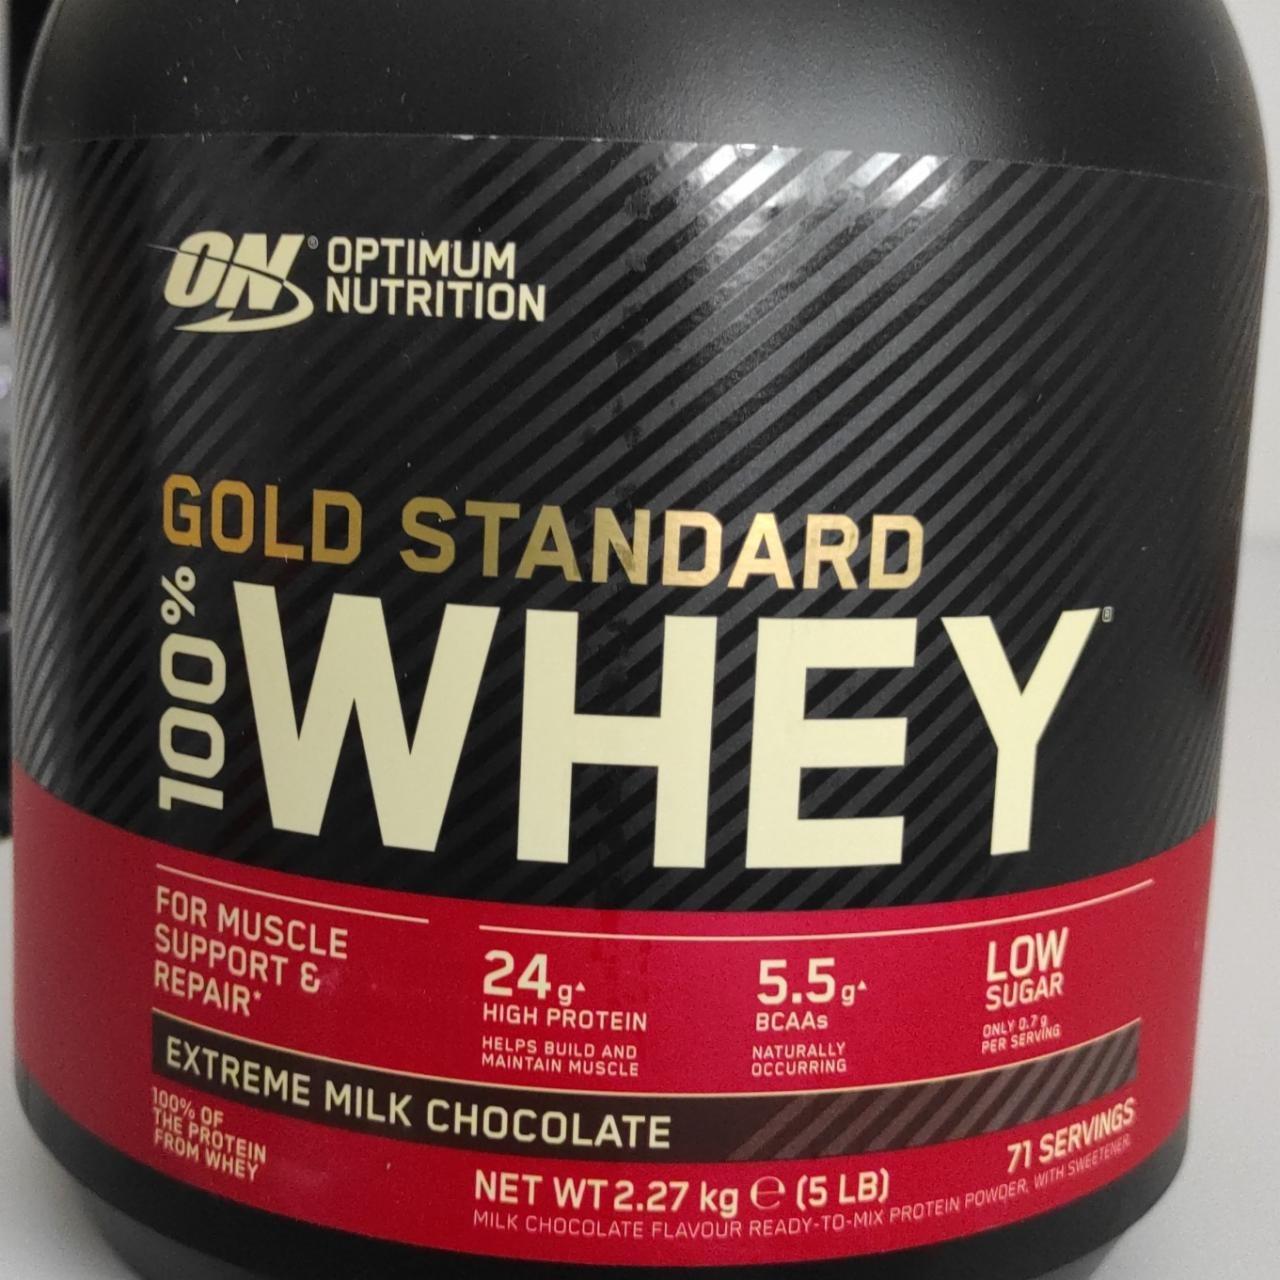 Képek - Gold standard whey protein Extreme milk chocolate Optimum Nutrition